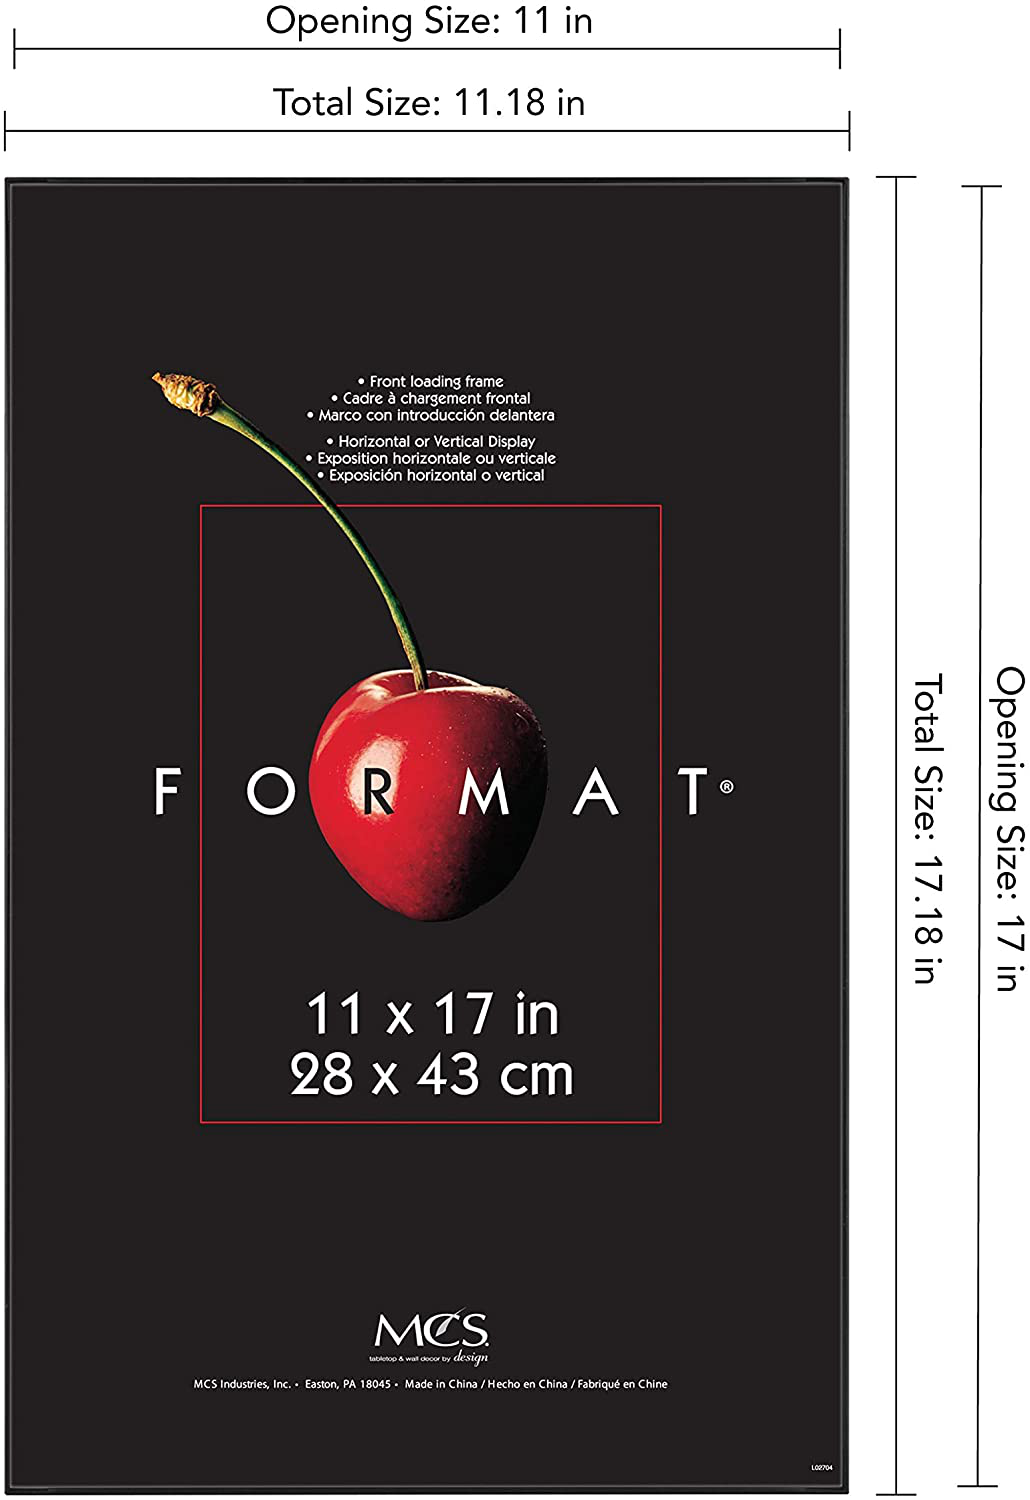 MCS Format Frames, 8.5 x 11 in, Black, 6 Count